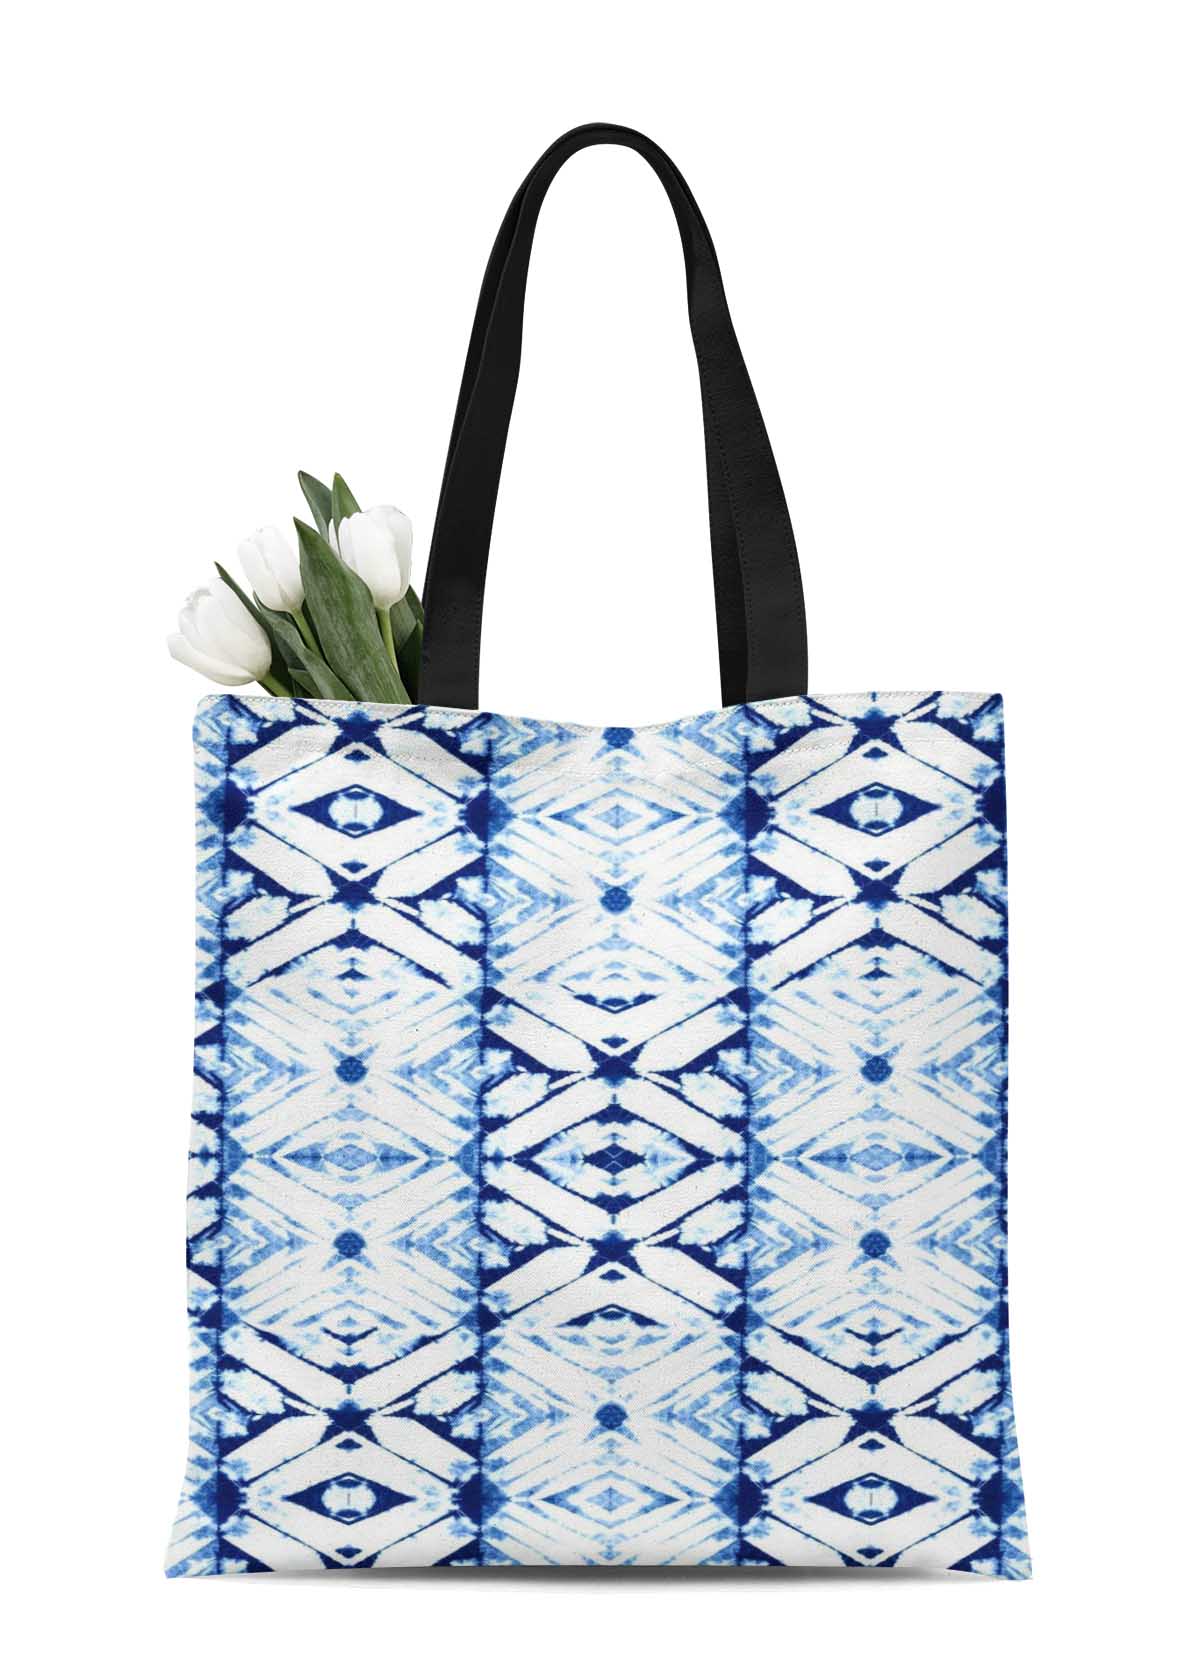 S4Sassy Blue Geometric Tie-Dye Print Canvas Shopping Tote Bag Carrying ...